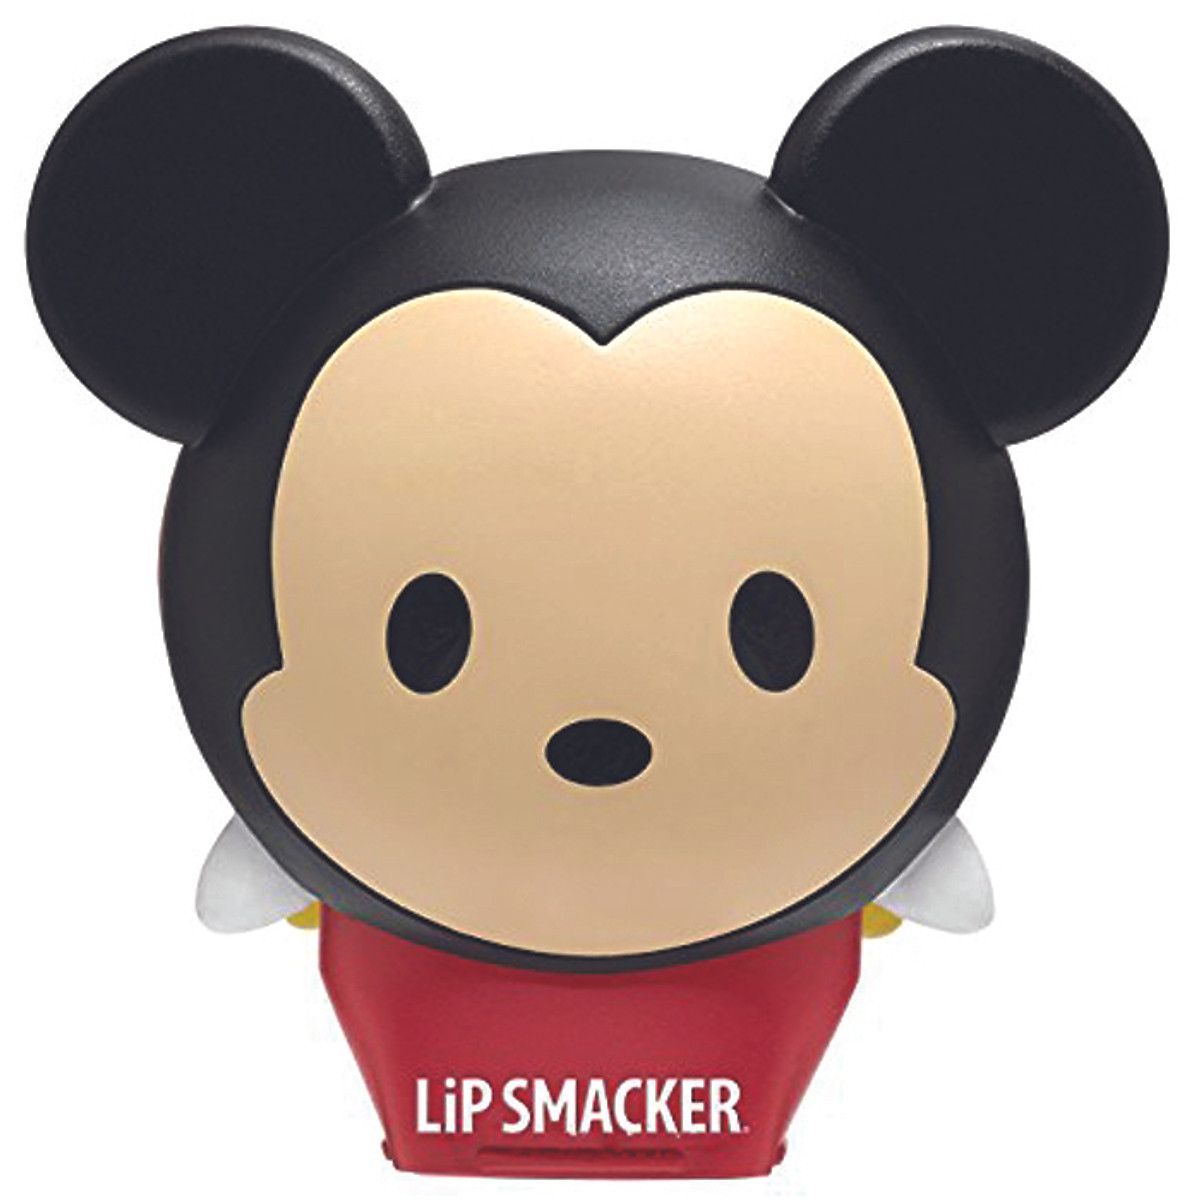 Lip Smacker - Son Disney Tsum Tsum Chuột Mickey - Lip Smacker ...